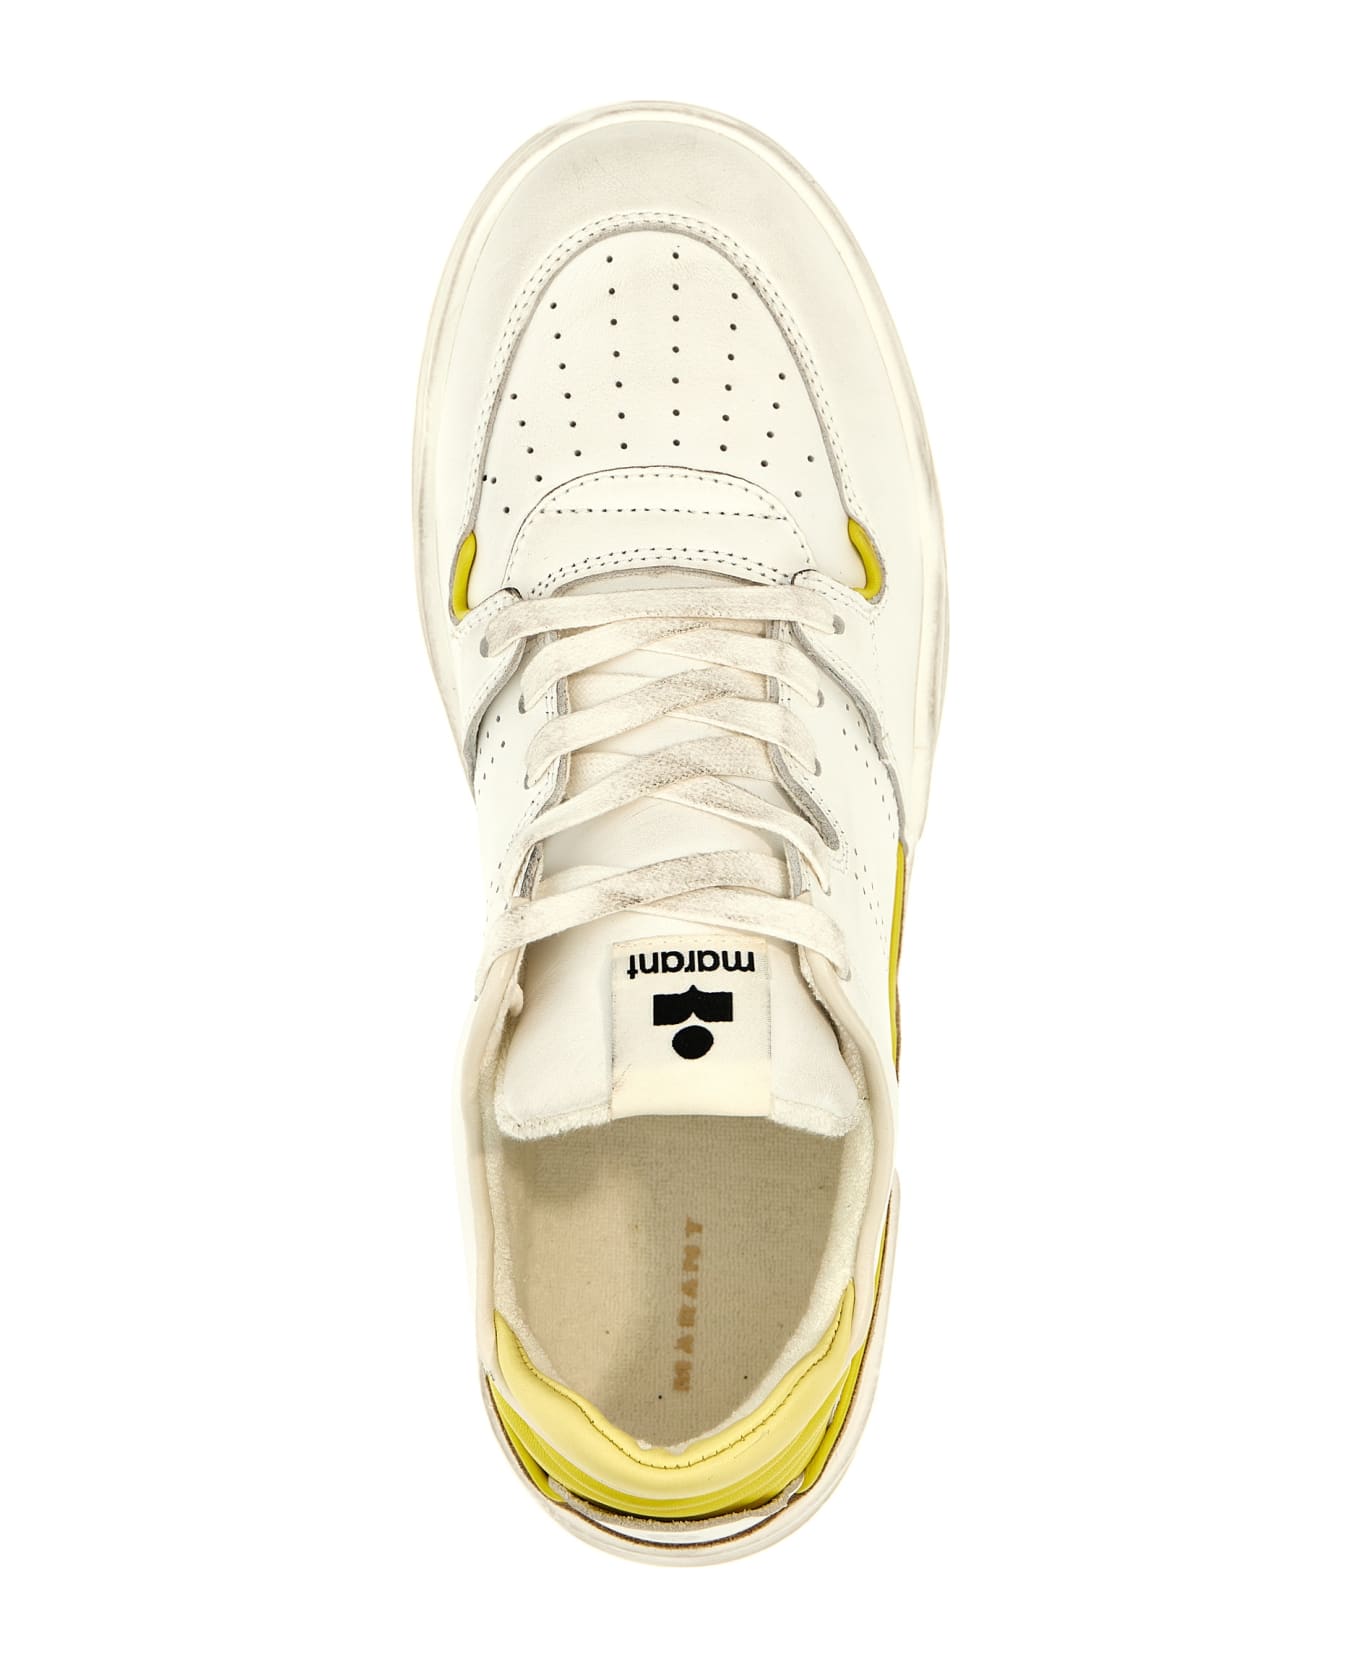 Isabel Marant 'classic Stadium' Sneakers - Yellow スニーカー